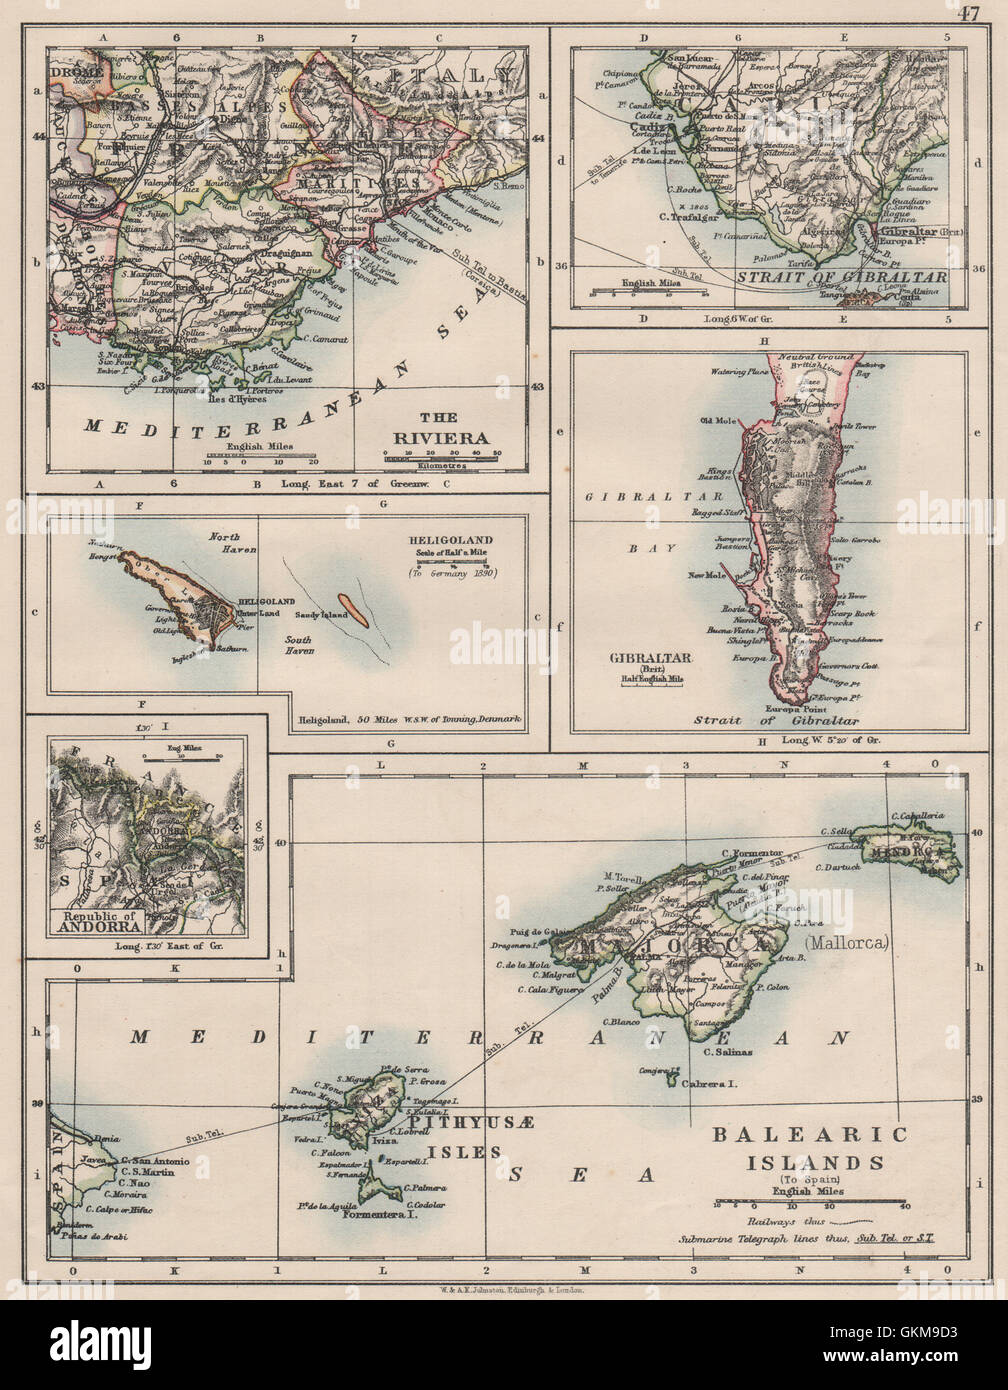 EUROPE.Balearic islands.Heligoland Gibraltar Andorra Riviera.JOHNSTON, 1900 map Stock Photo